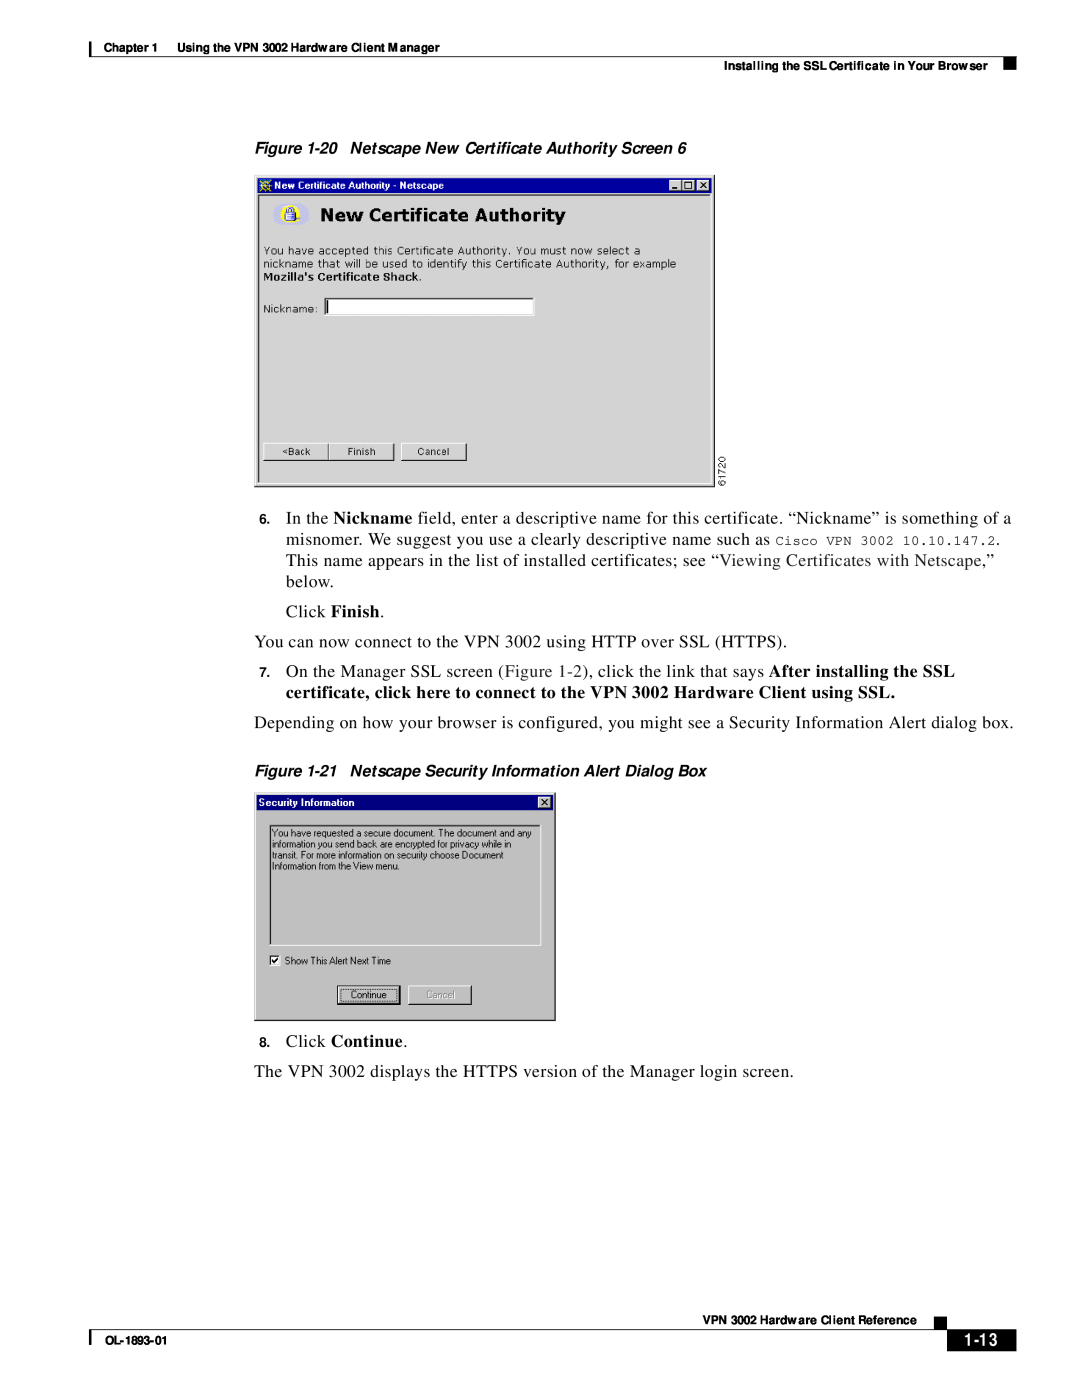 Cisco Systems VPN 3002 manual Click Continue, 1-13 